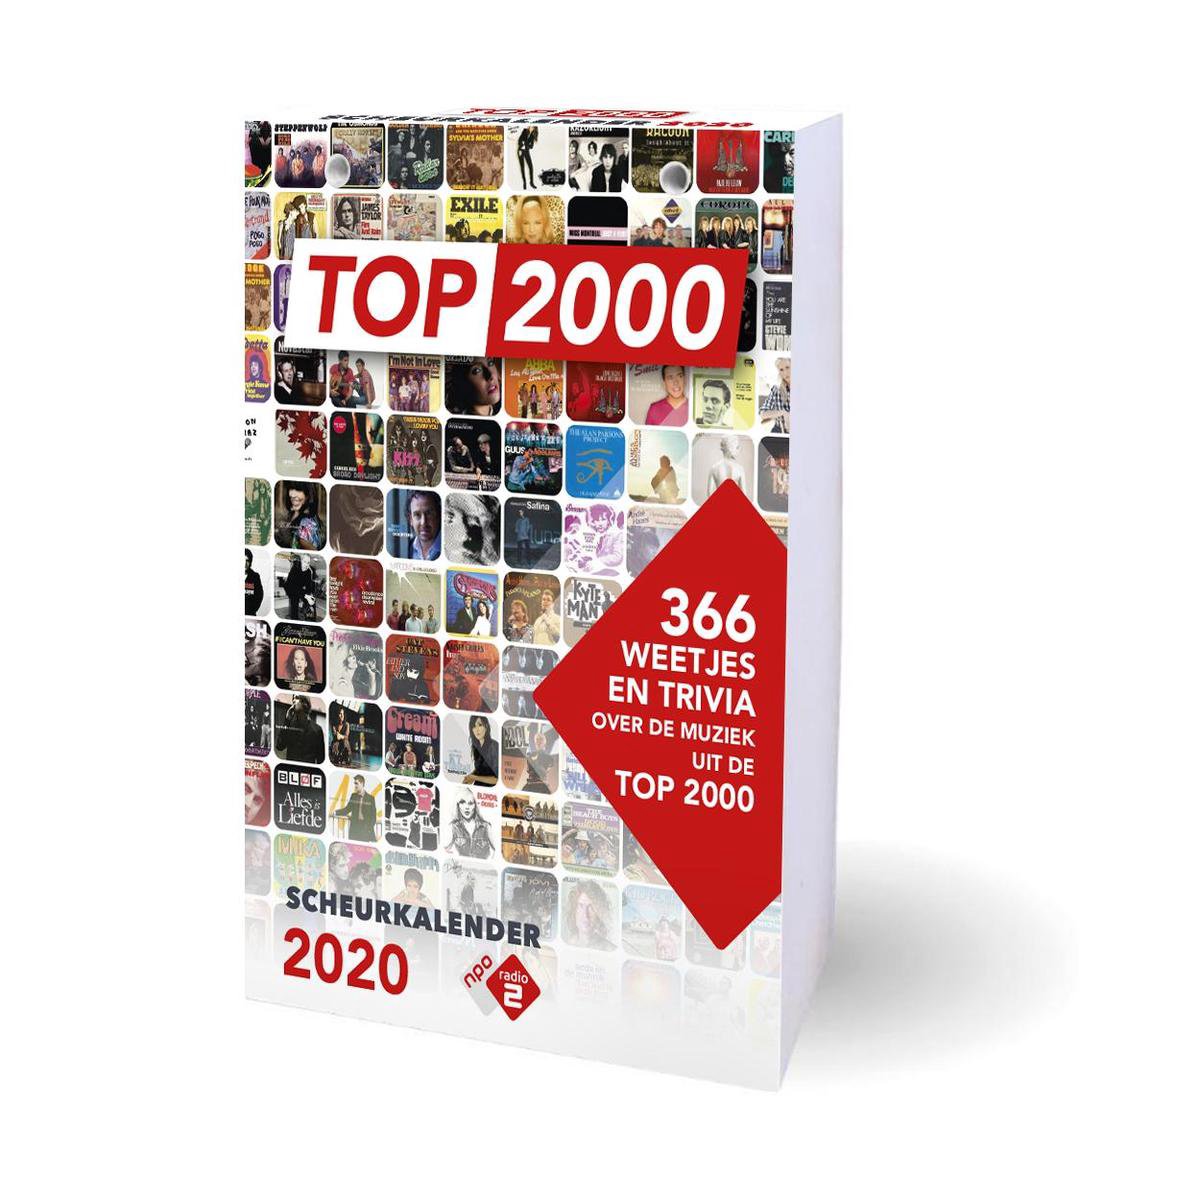 Top 2000 Scheurkalender 2020 - various artists